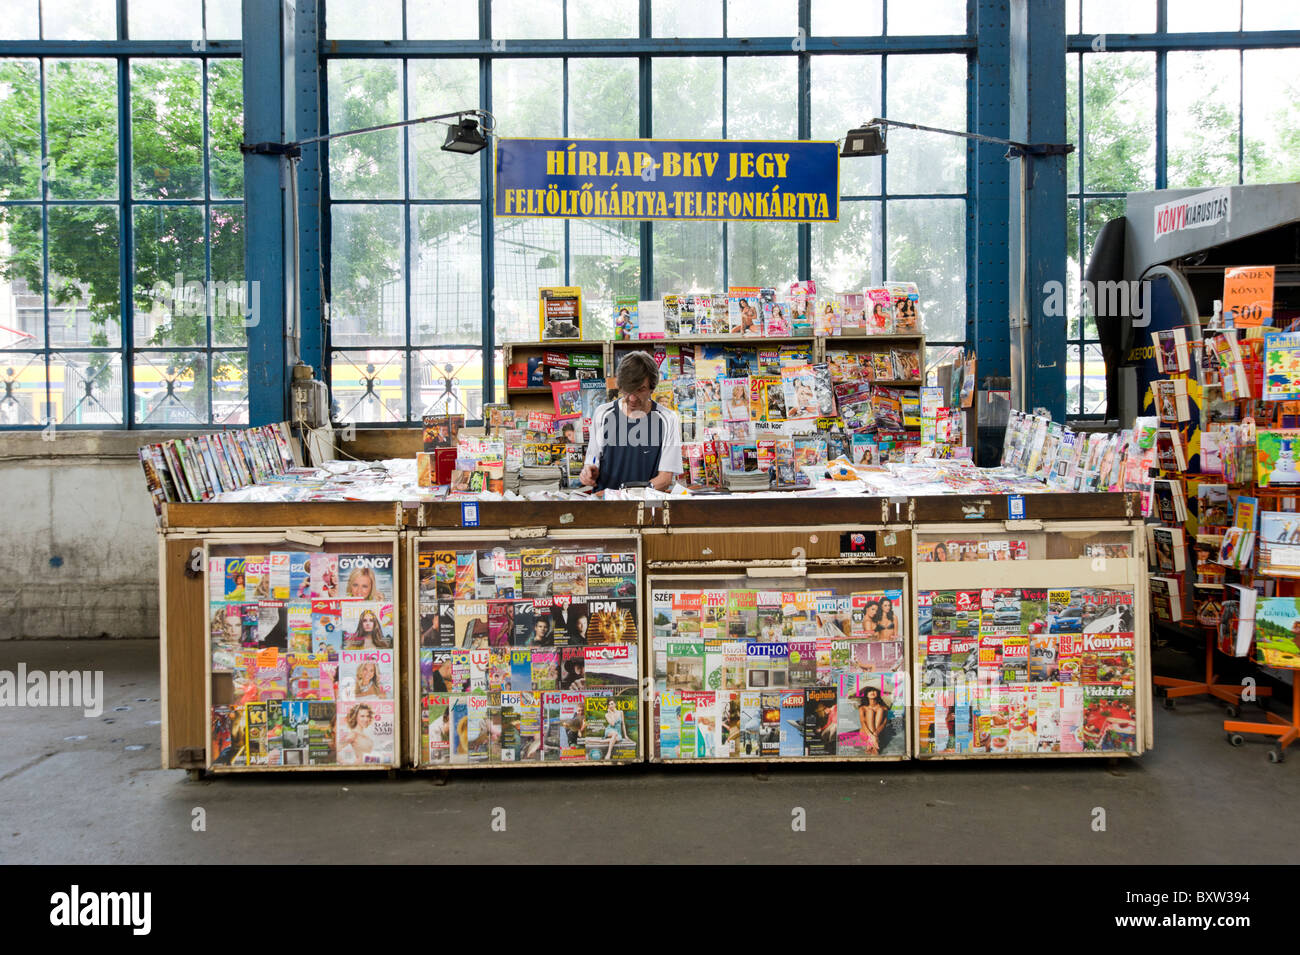 Magazine vendor stall in Budapest Nyugati pályaudvar train station, Hungary Stock Photo